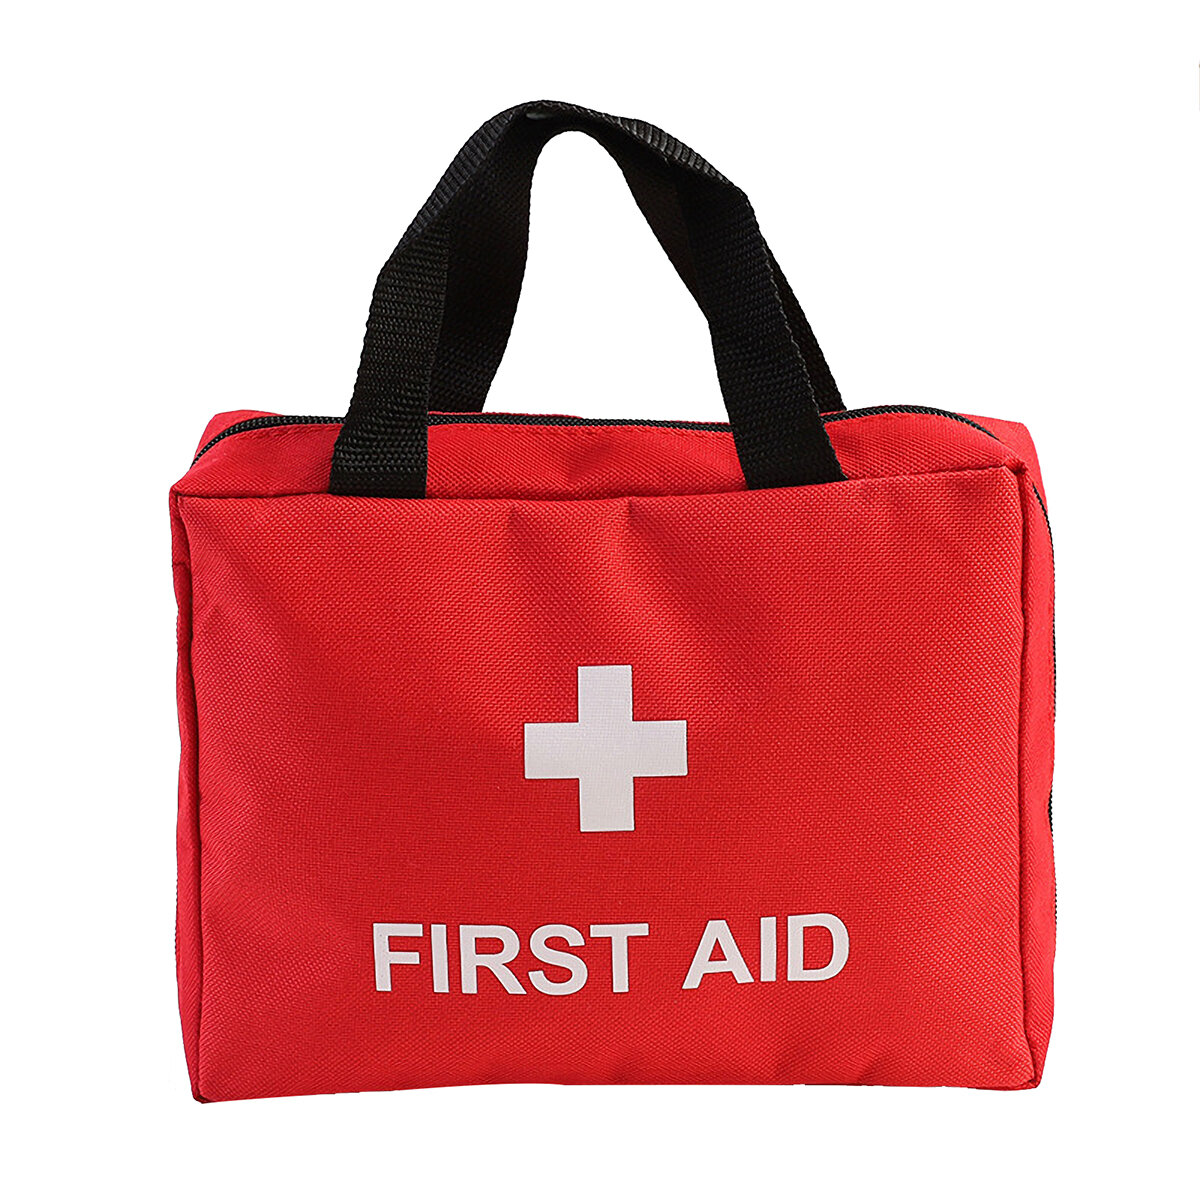 

Travel Sorage Bag First Aid Kit Waterproof Emergency Bag Outdoor Lifesaving Bag Field self Rescue Medical Bag